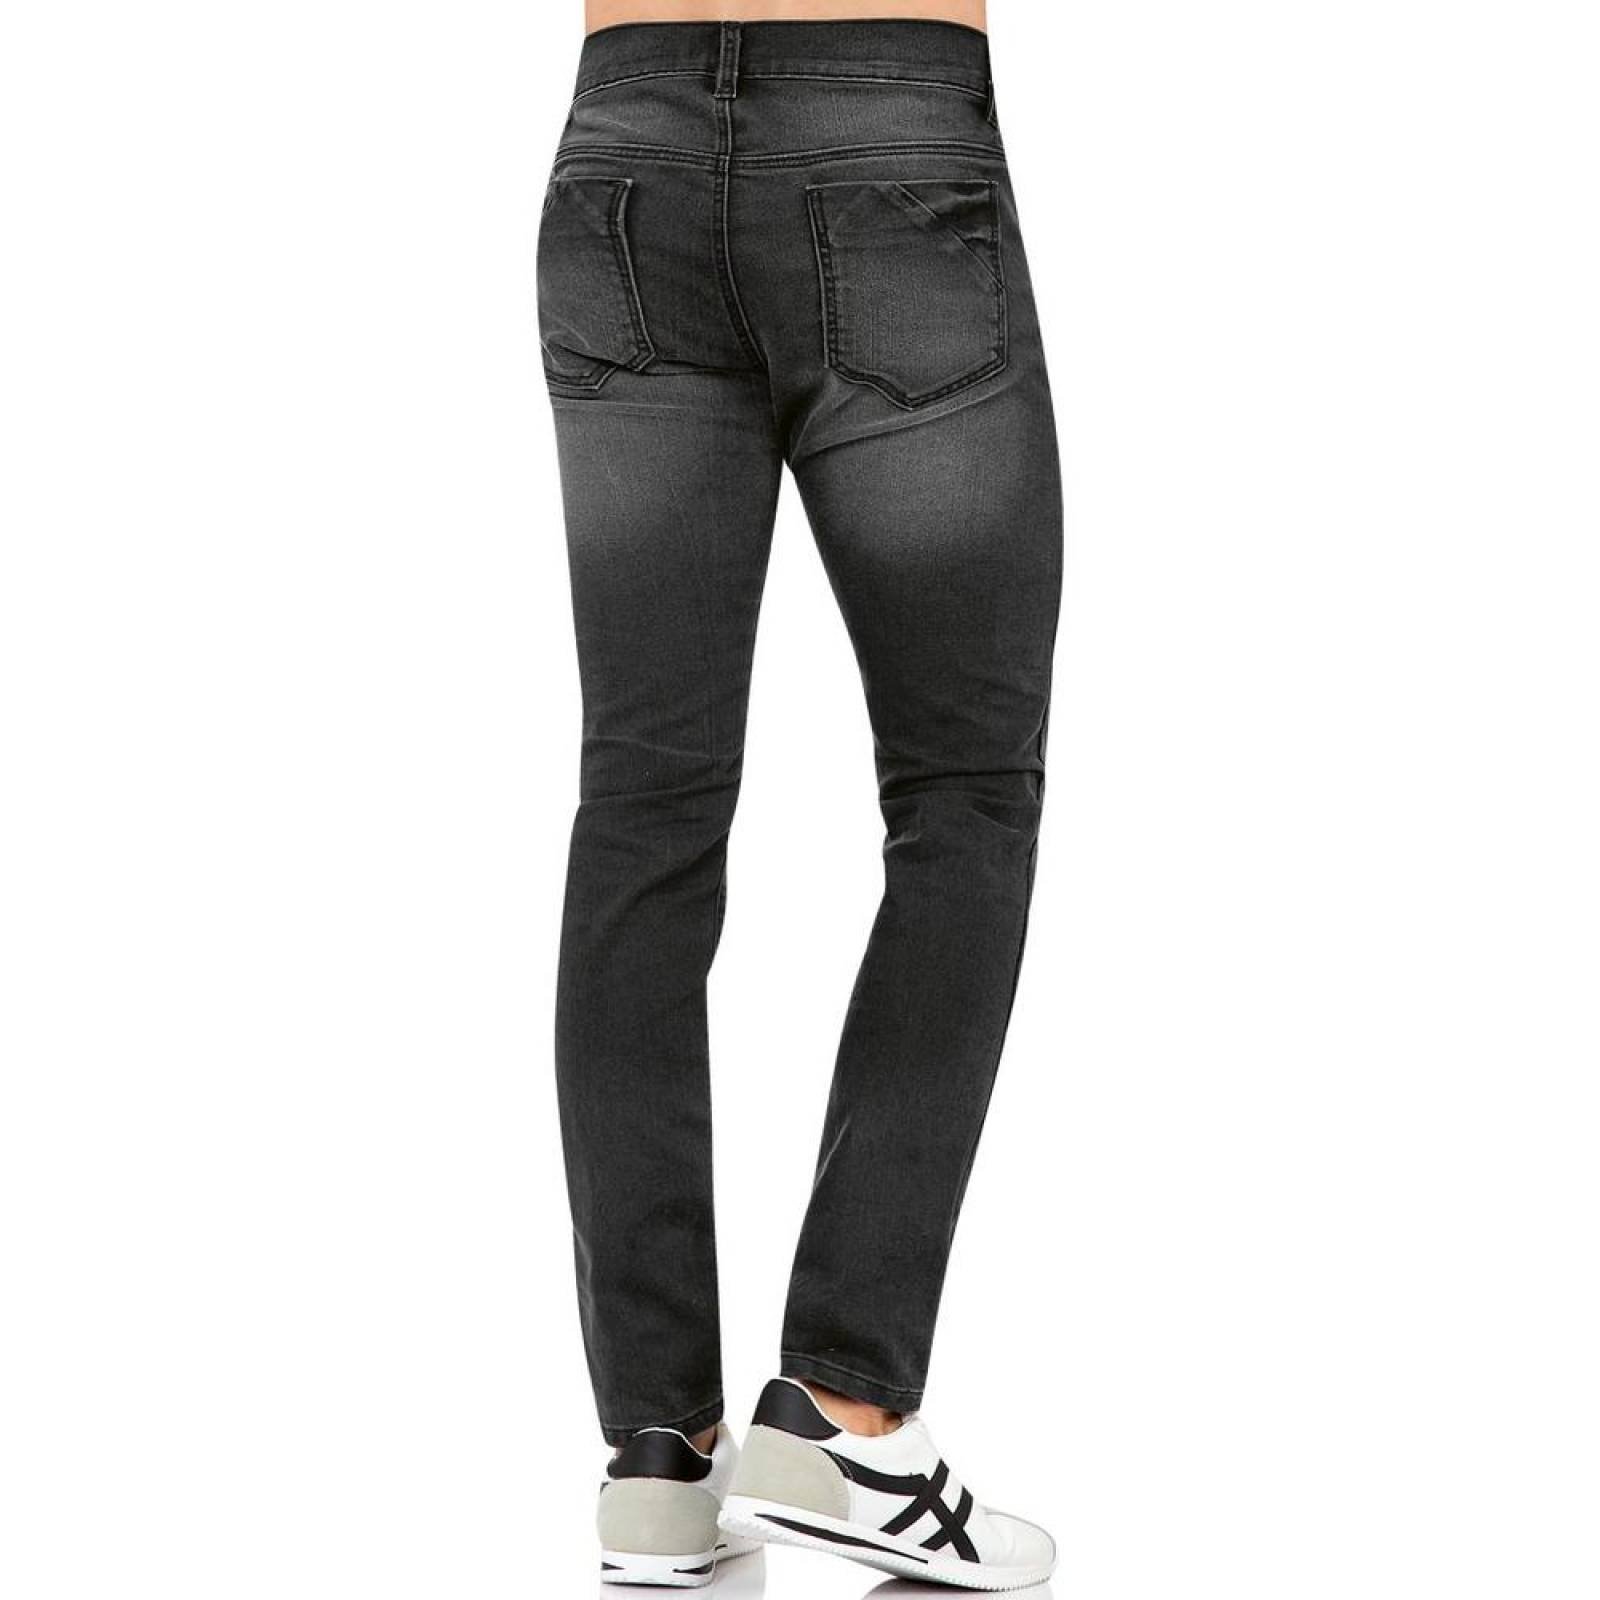 Jeans Moda Hombre Salvaje Tentación Negro 63103302 Mezclilla Stretch 